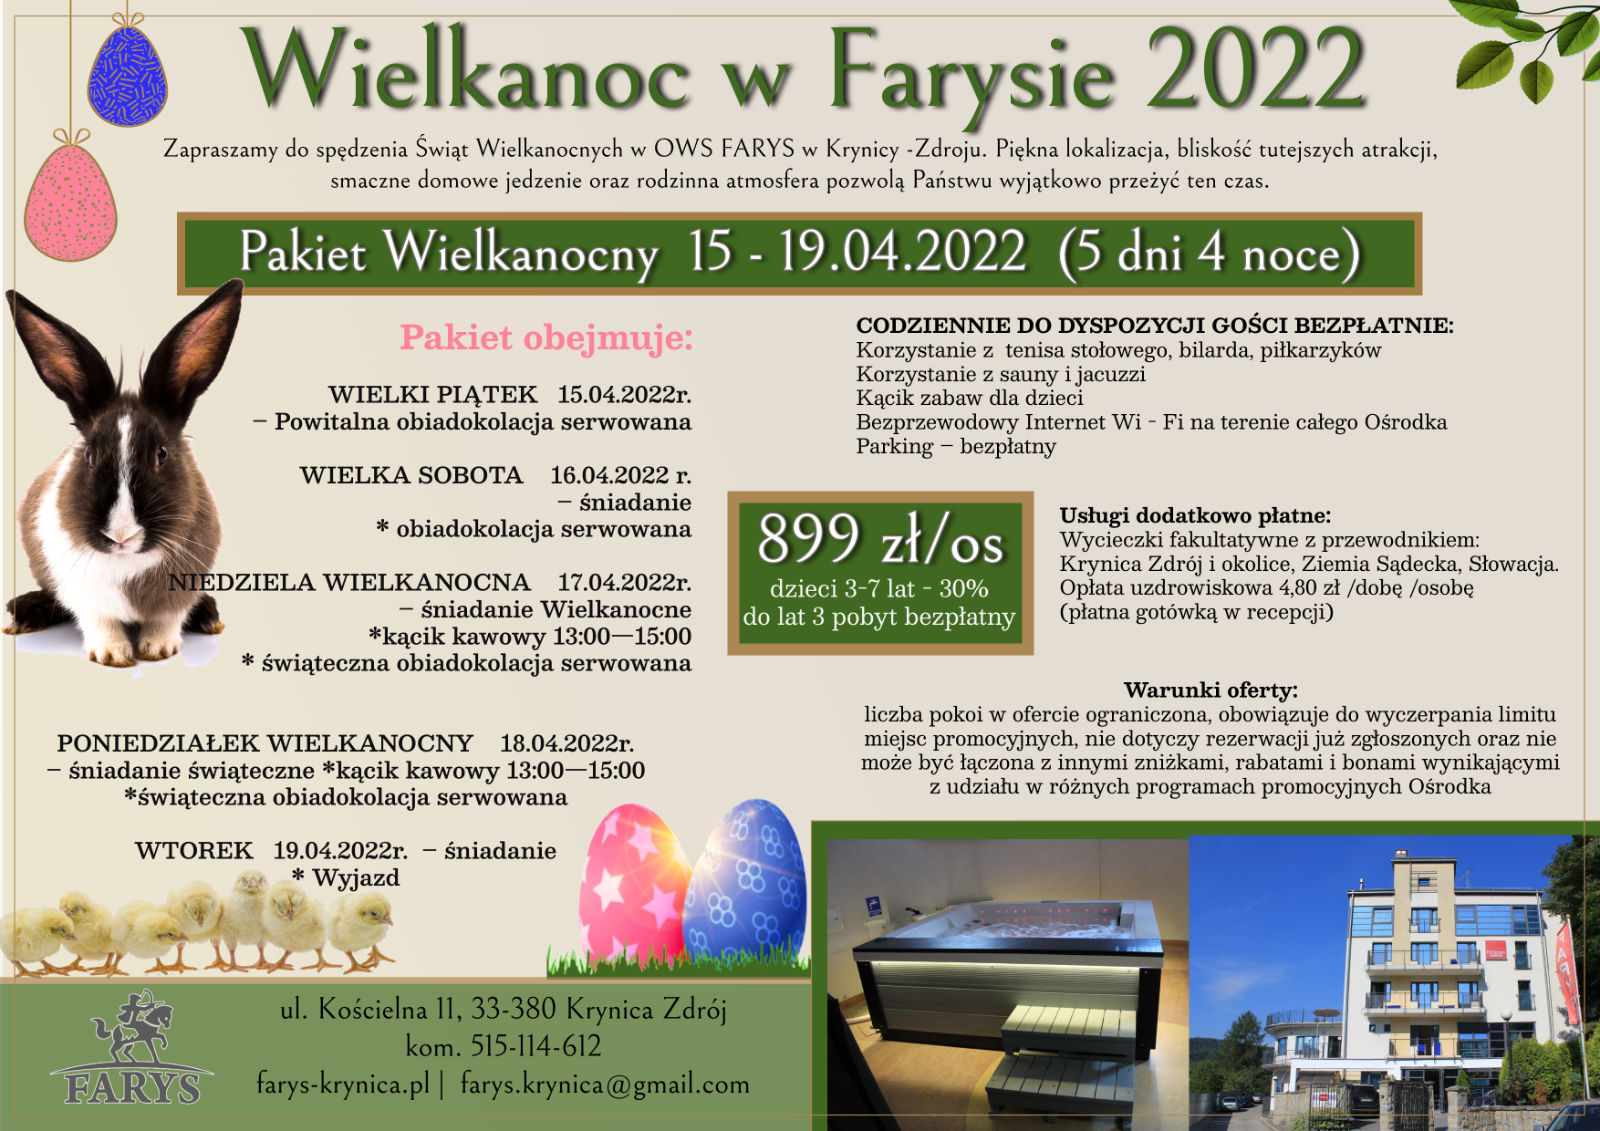 //farys-krynica.pl/wp-content/uploads/2022/03/Wielkanoc22-oferta.jpg